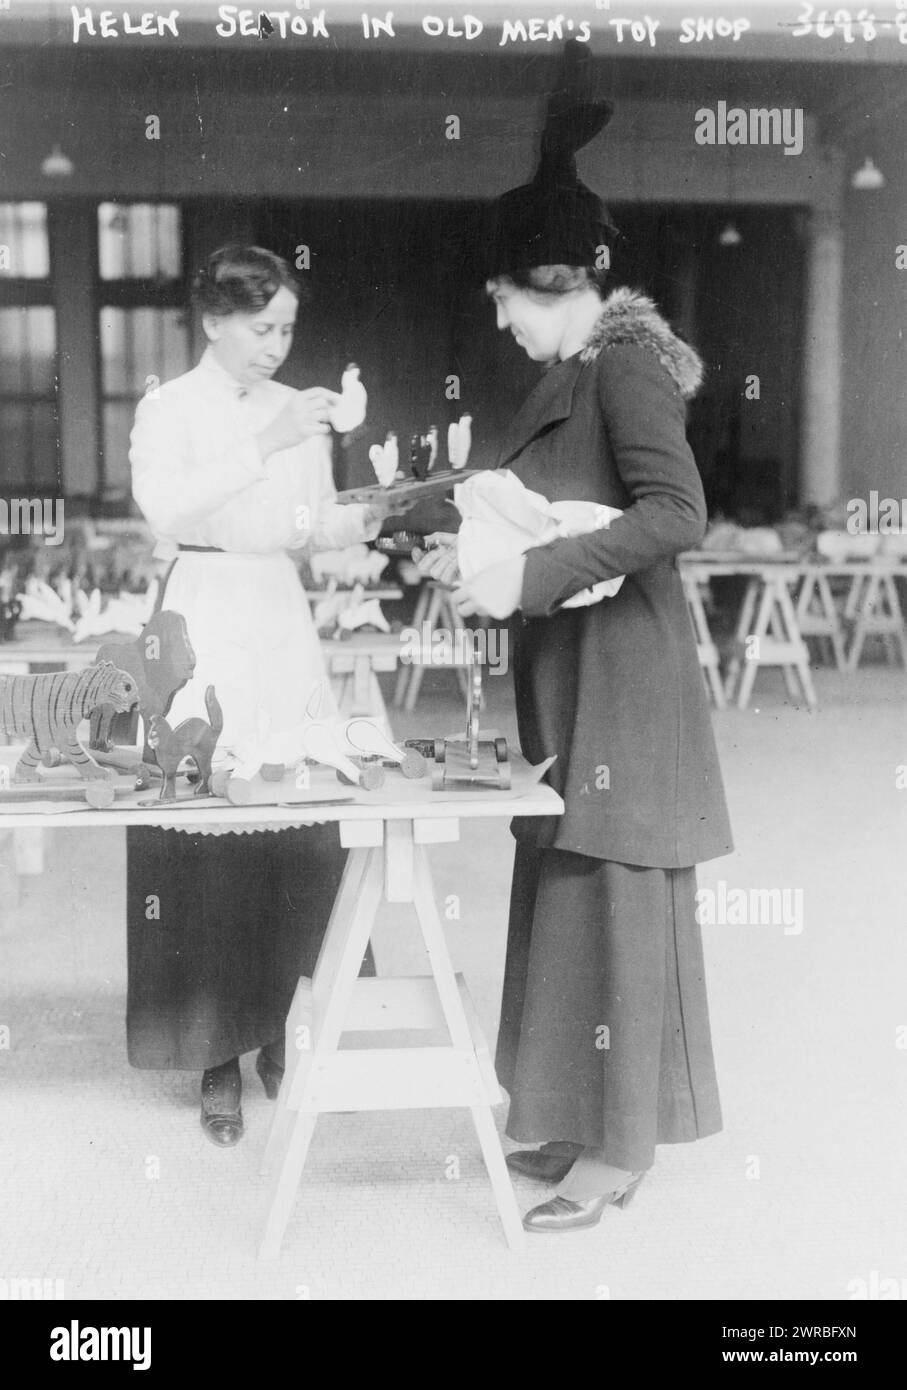 Helen Seton in Old men's toy shop, 1915., Toys, New York (stato), 1910-1920, stampe fotografiche, 1910-1920., stampe fotografiche, 1910-1920, 1 stampa fotografica Foto Stock